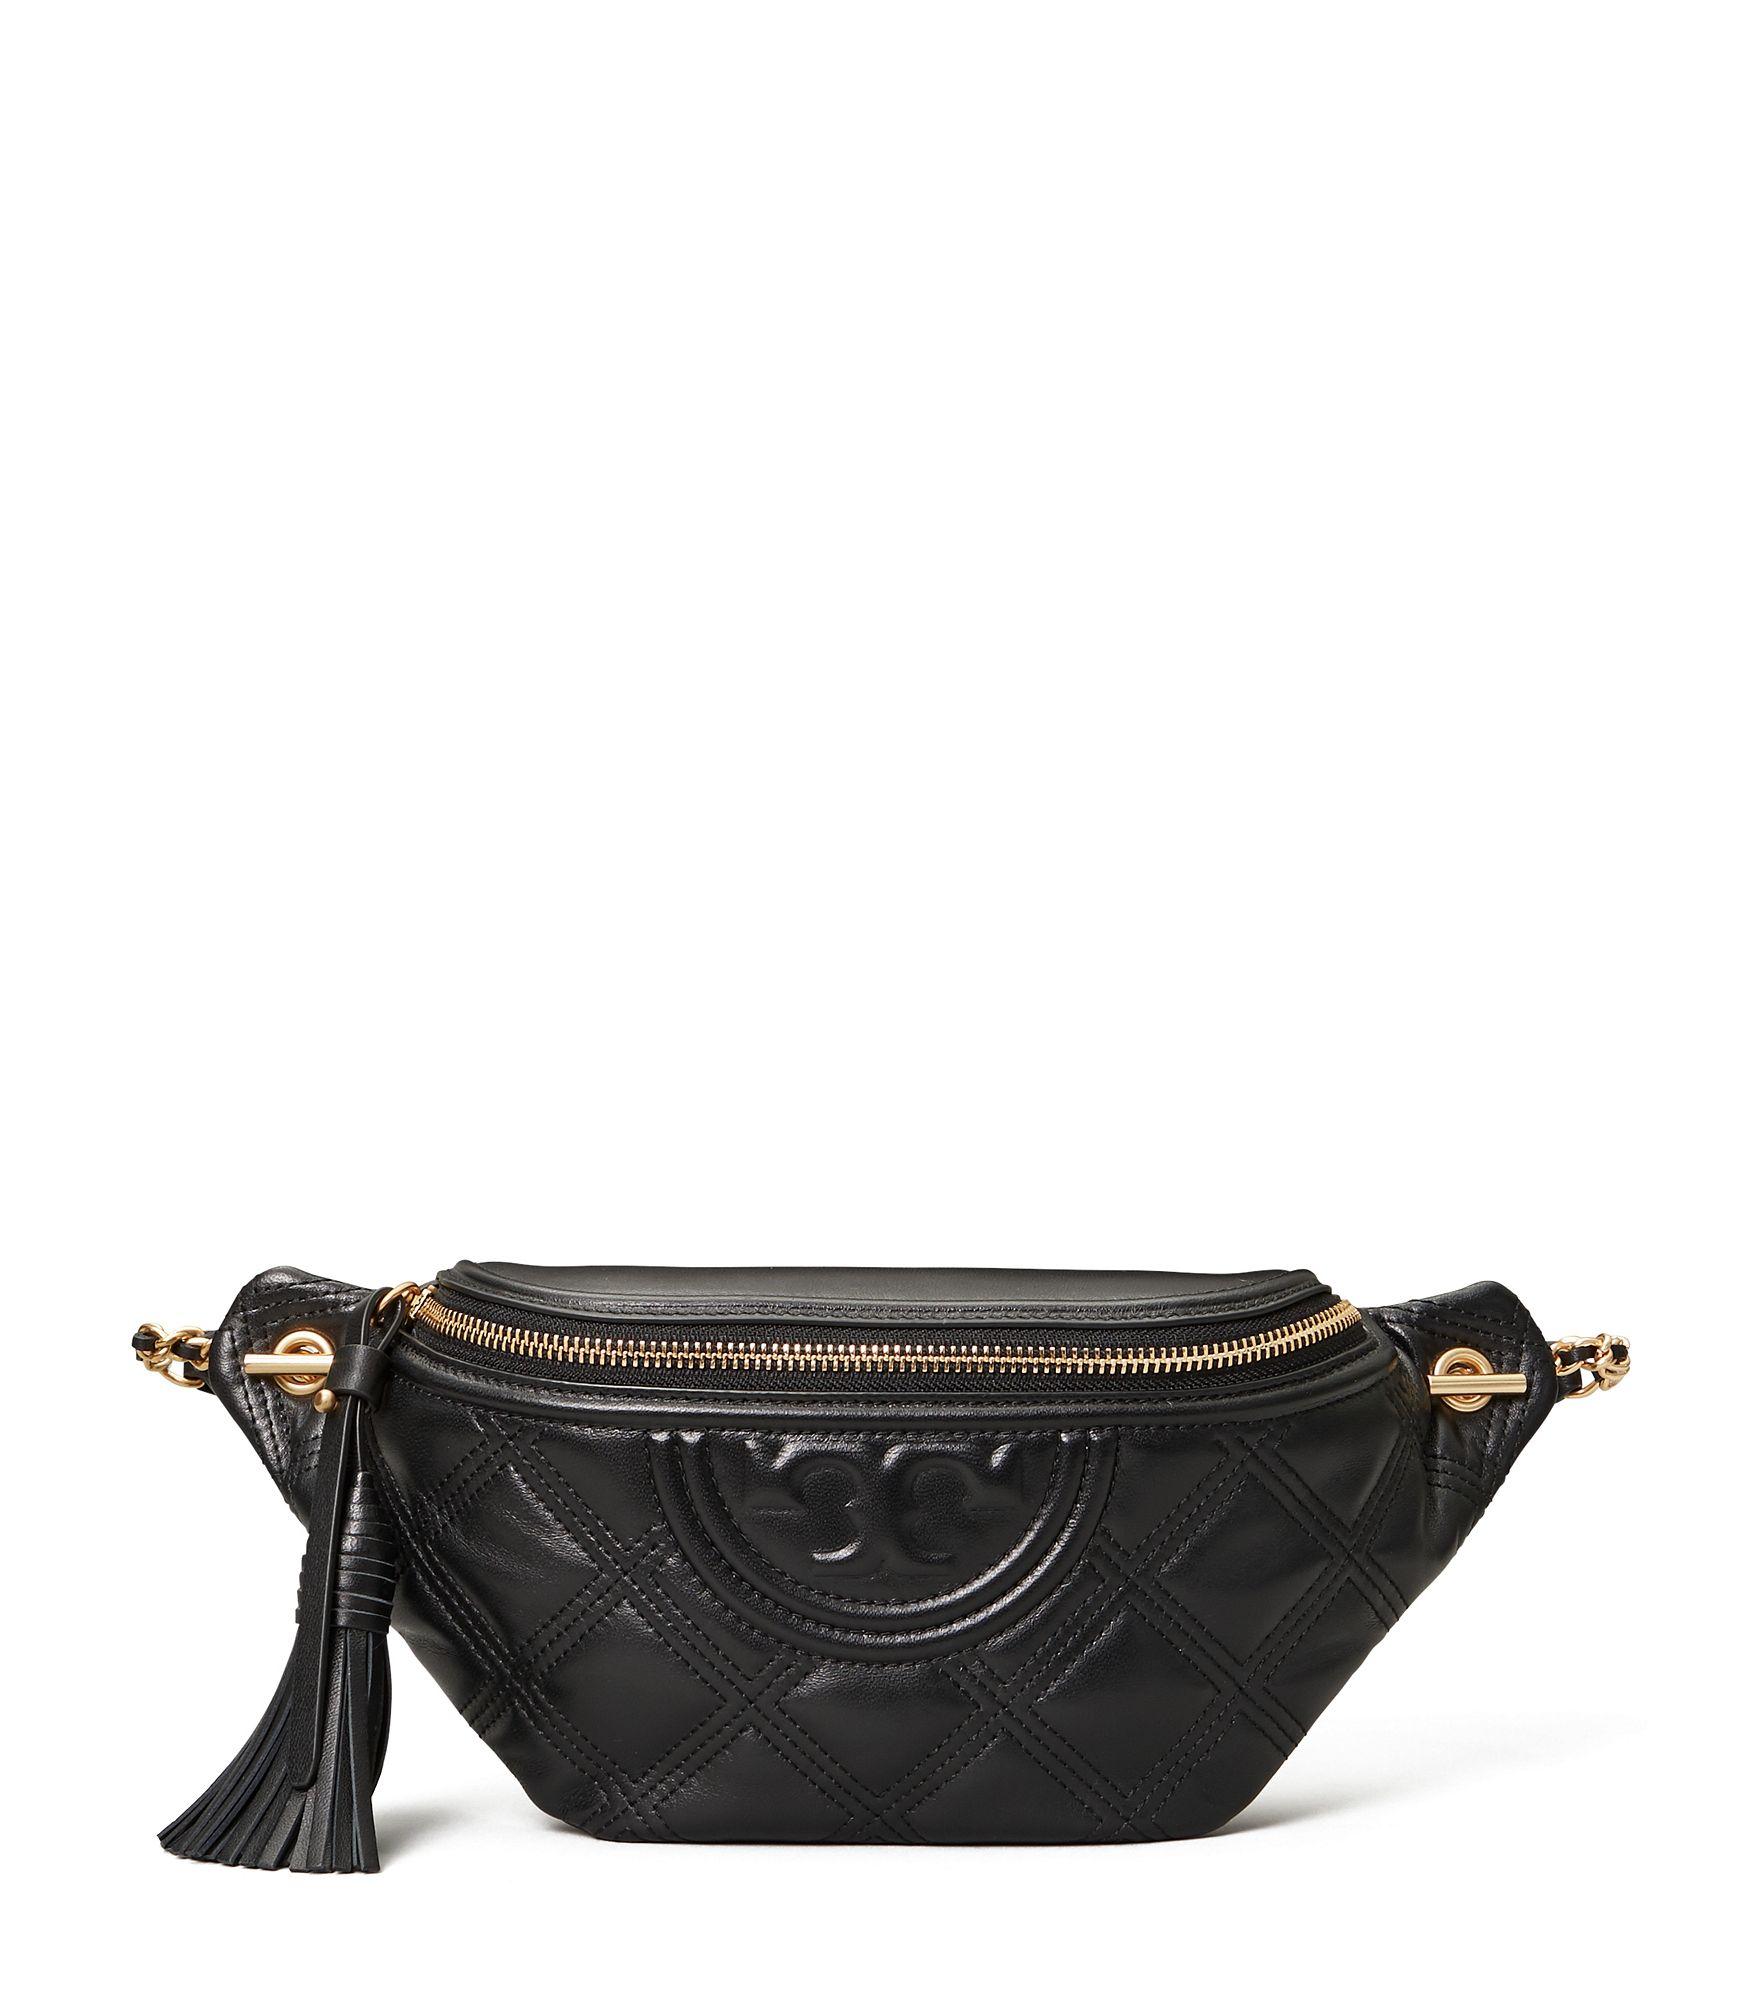 Tory Burch Leather Fleming Soft Belt Bag in Black - Lyst